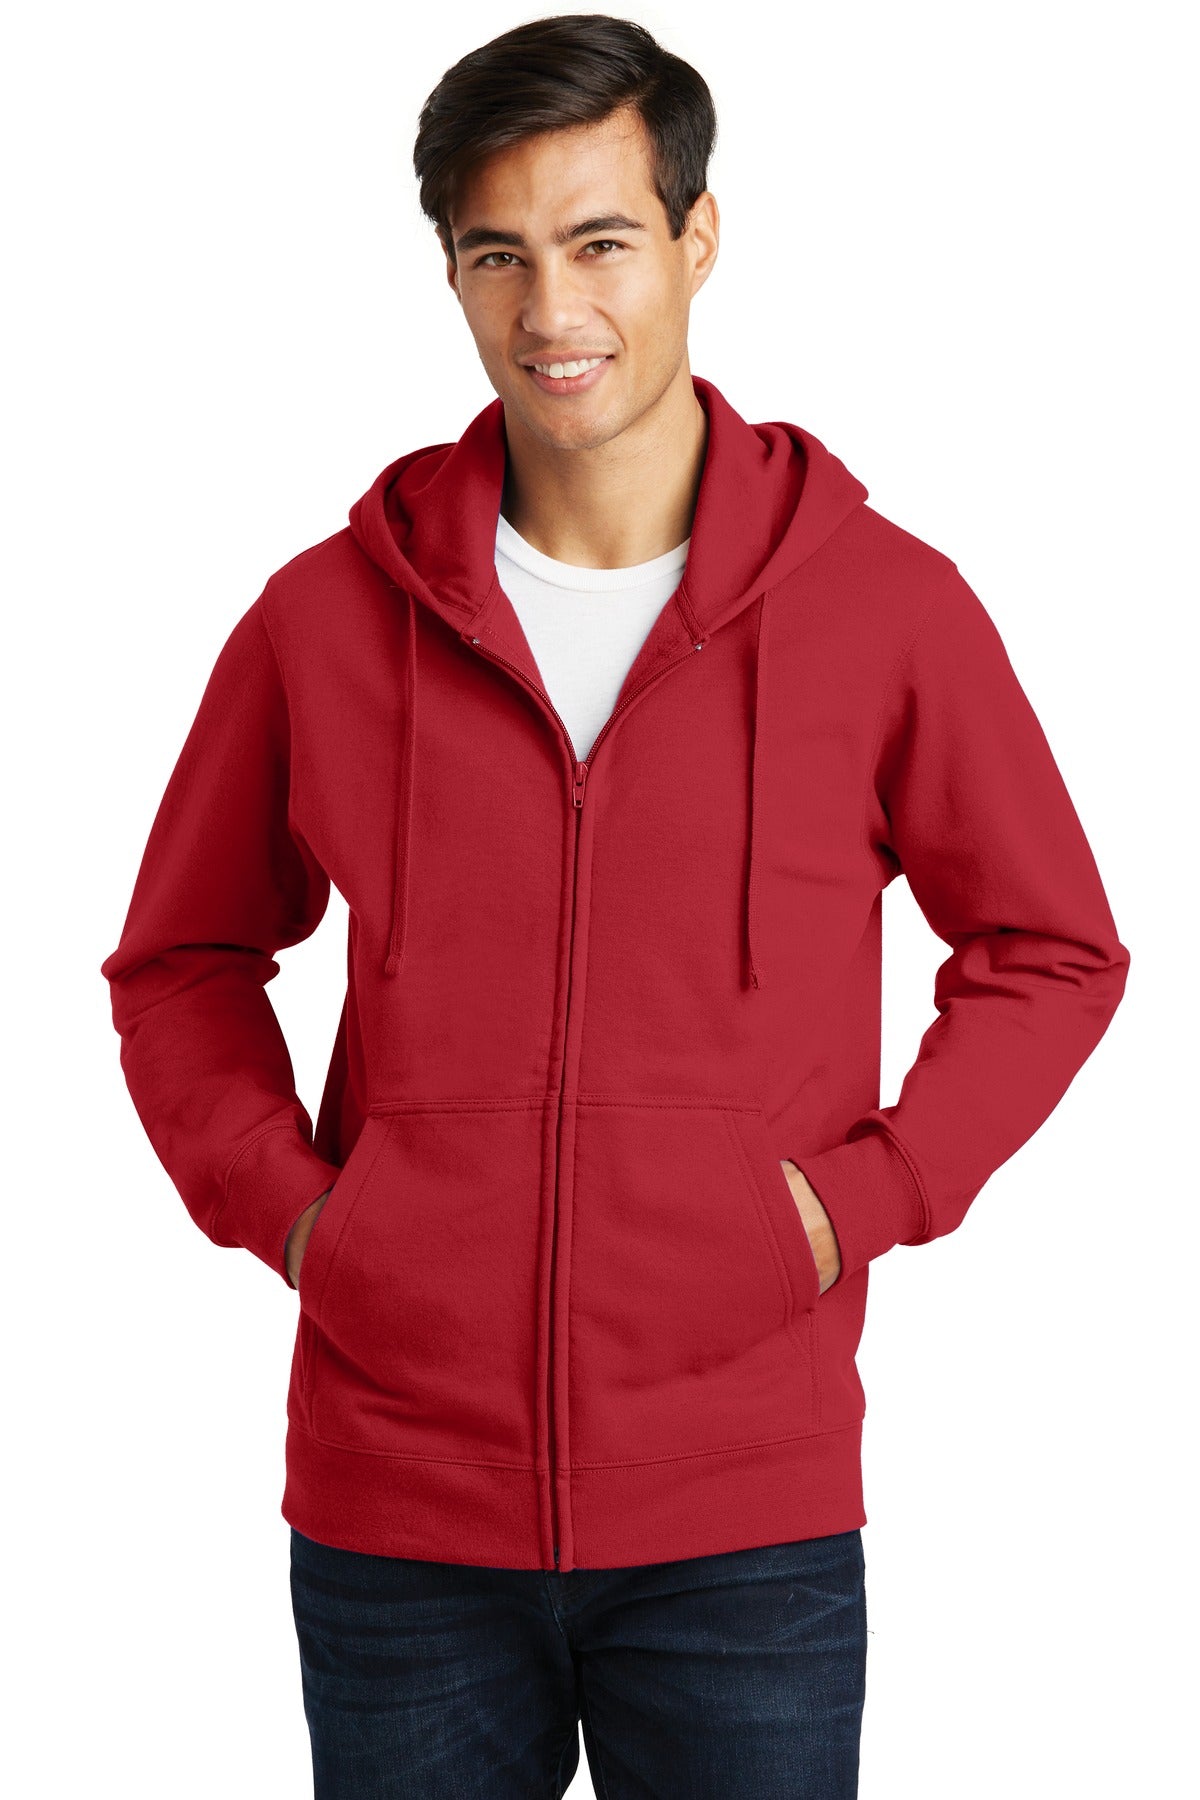 Sweatshirts/Fleece Team Cardinal Port & Company